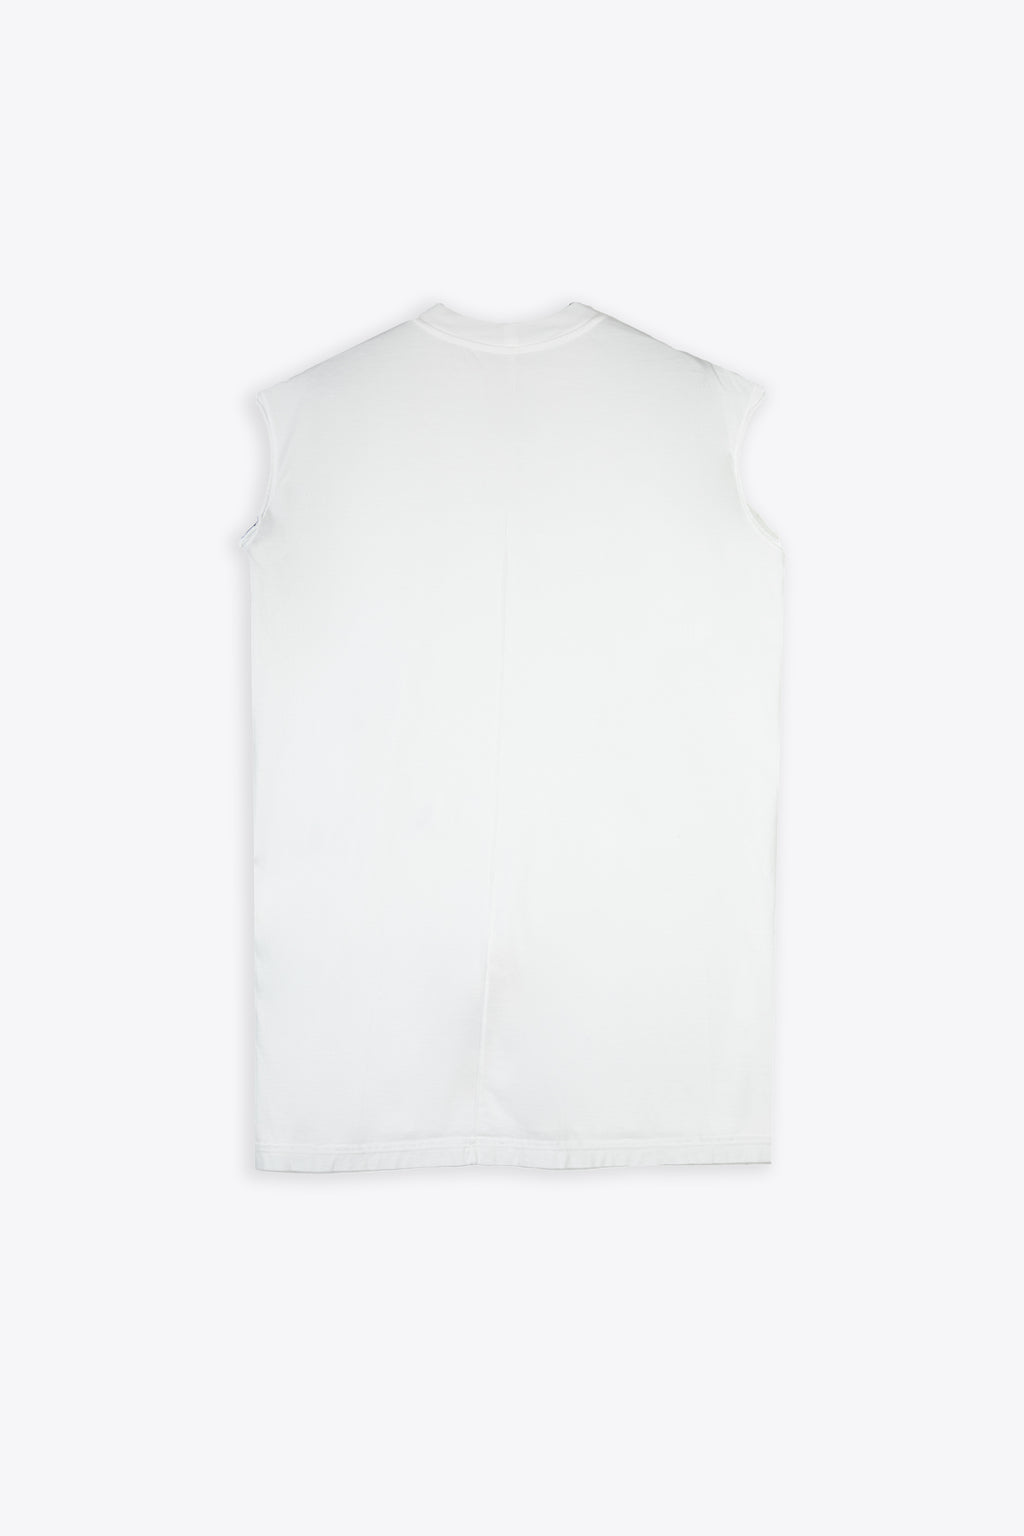 alt-image__Off-white-cotton-oversized-sleveless-t-shirt---Tarp-T